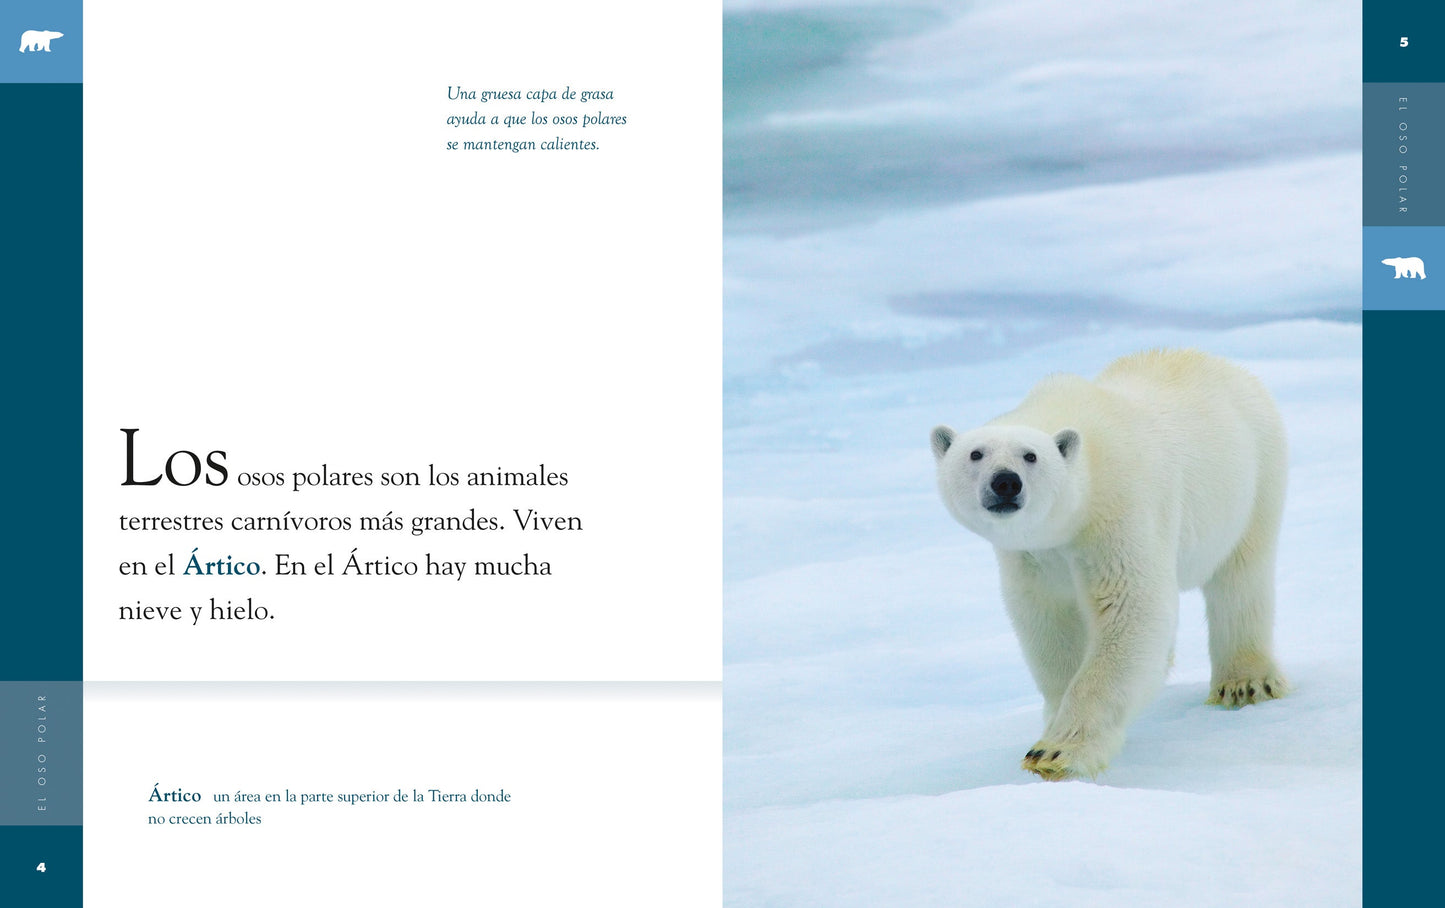 Planeta animal - New Edition: El oso polar by The Creative Company Shop